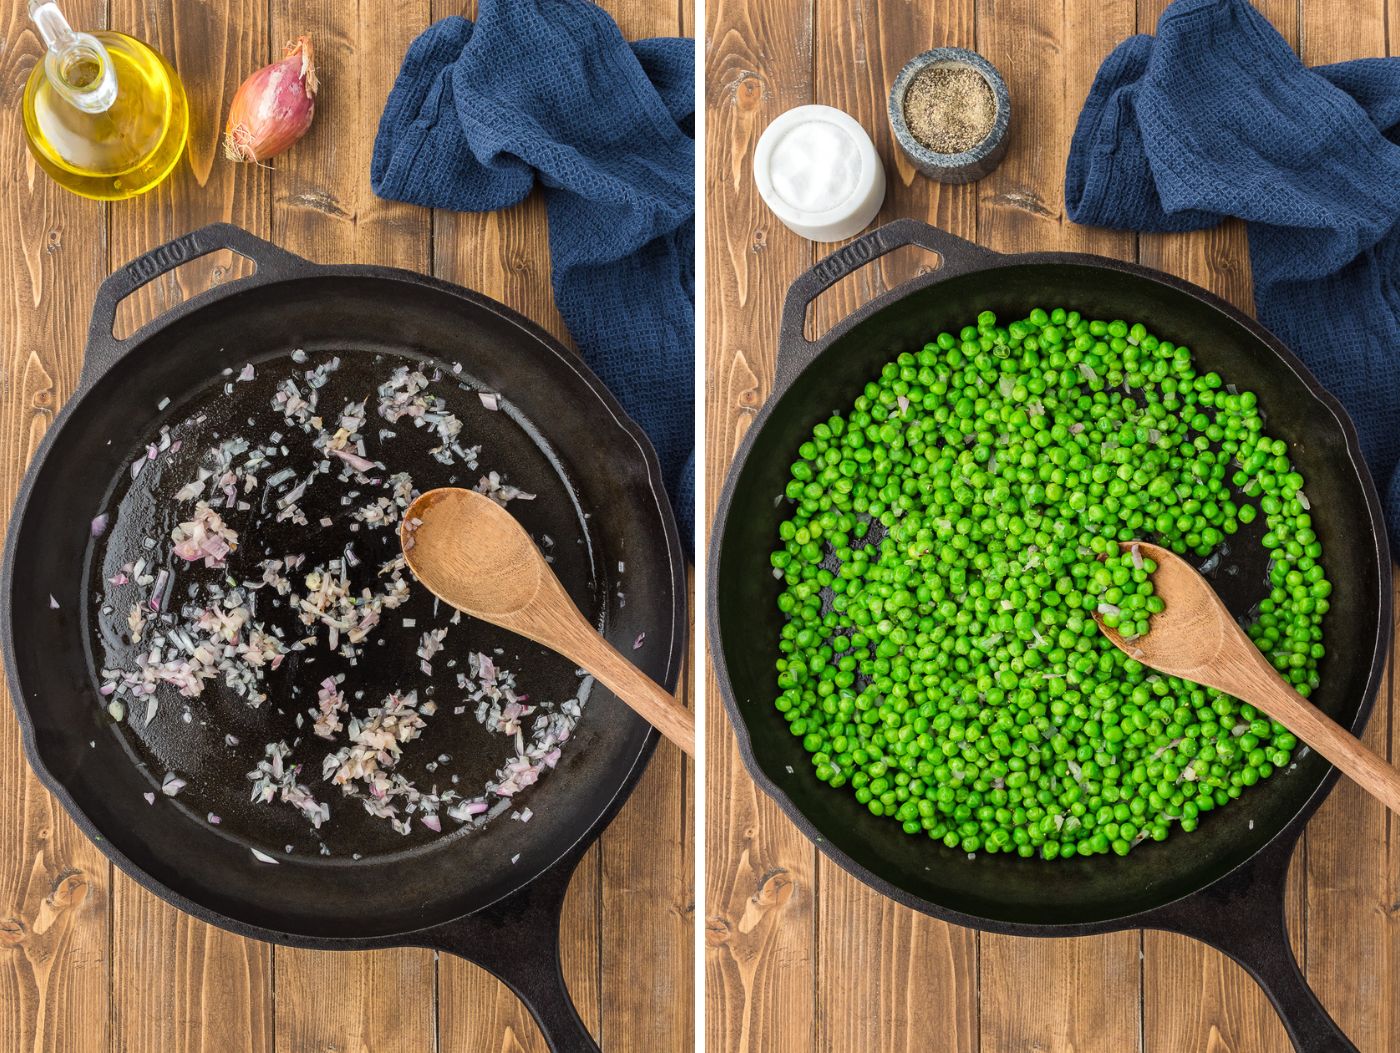 sauteeing shallot and adding peas to a pan